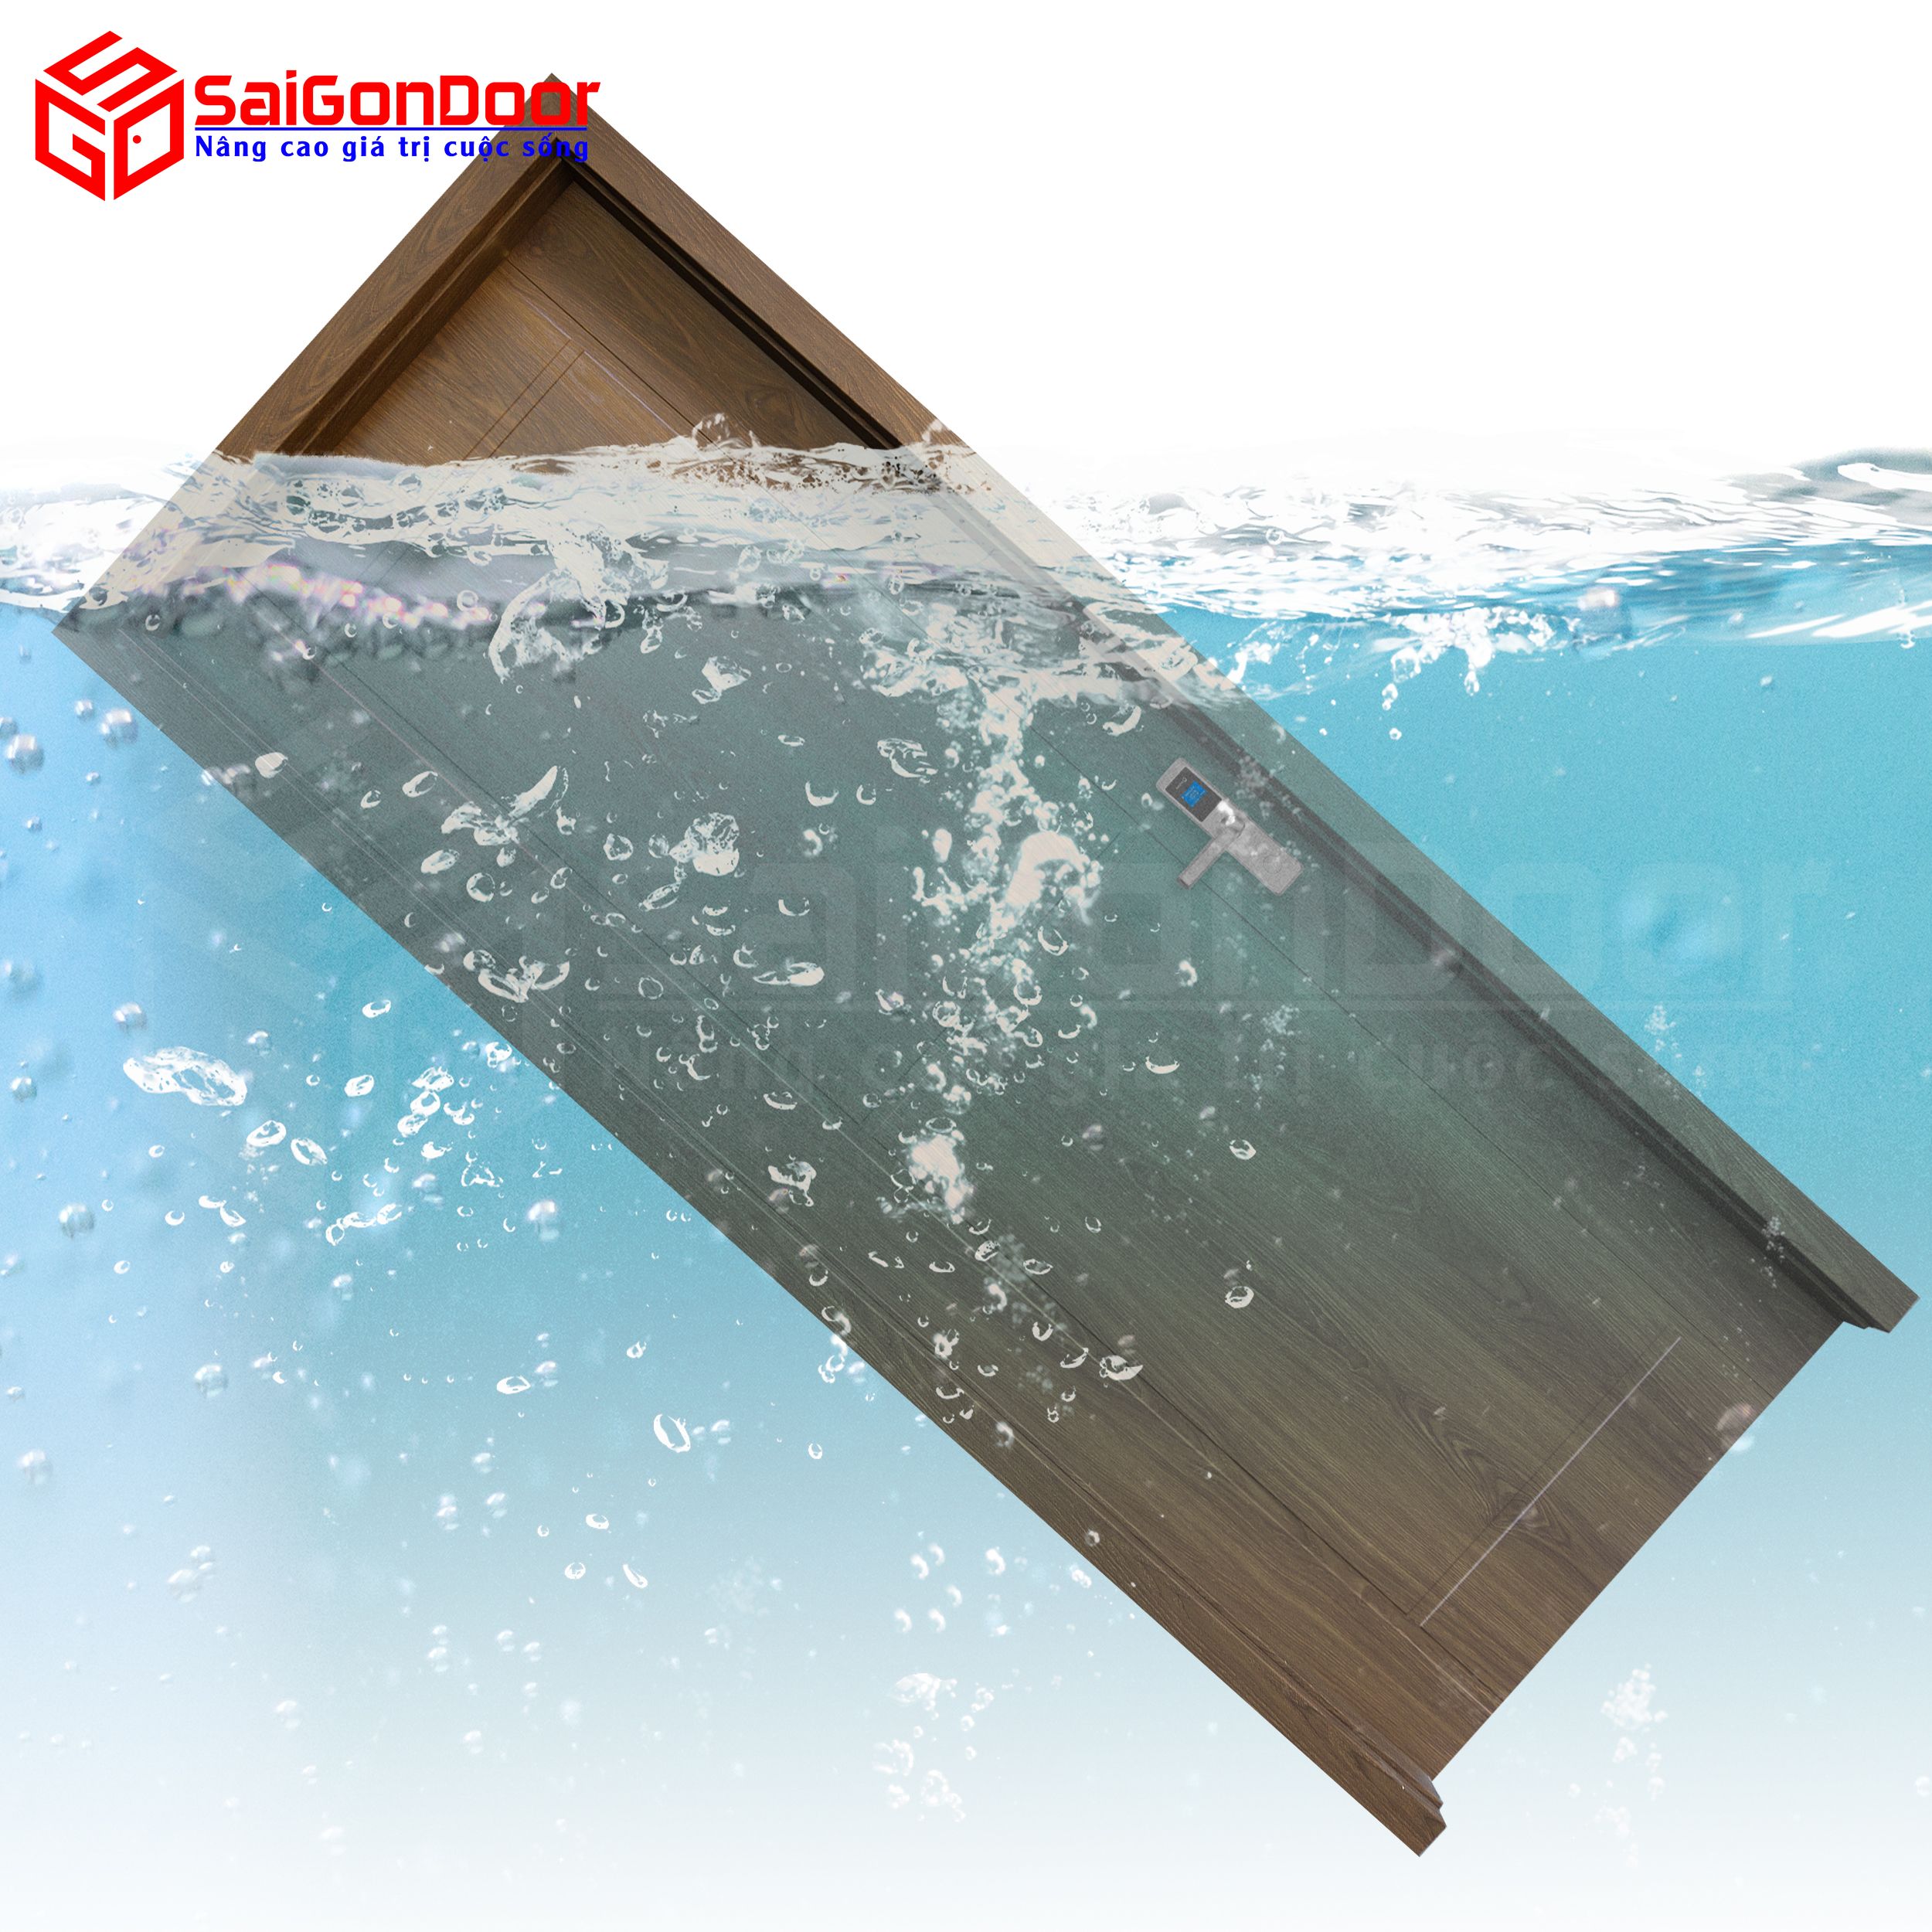 Cửa gỗ nhà tắm Composite SaiGonDoor